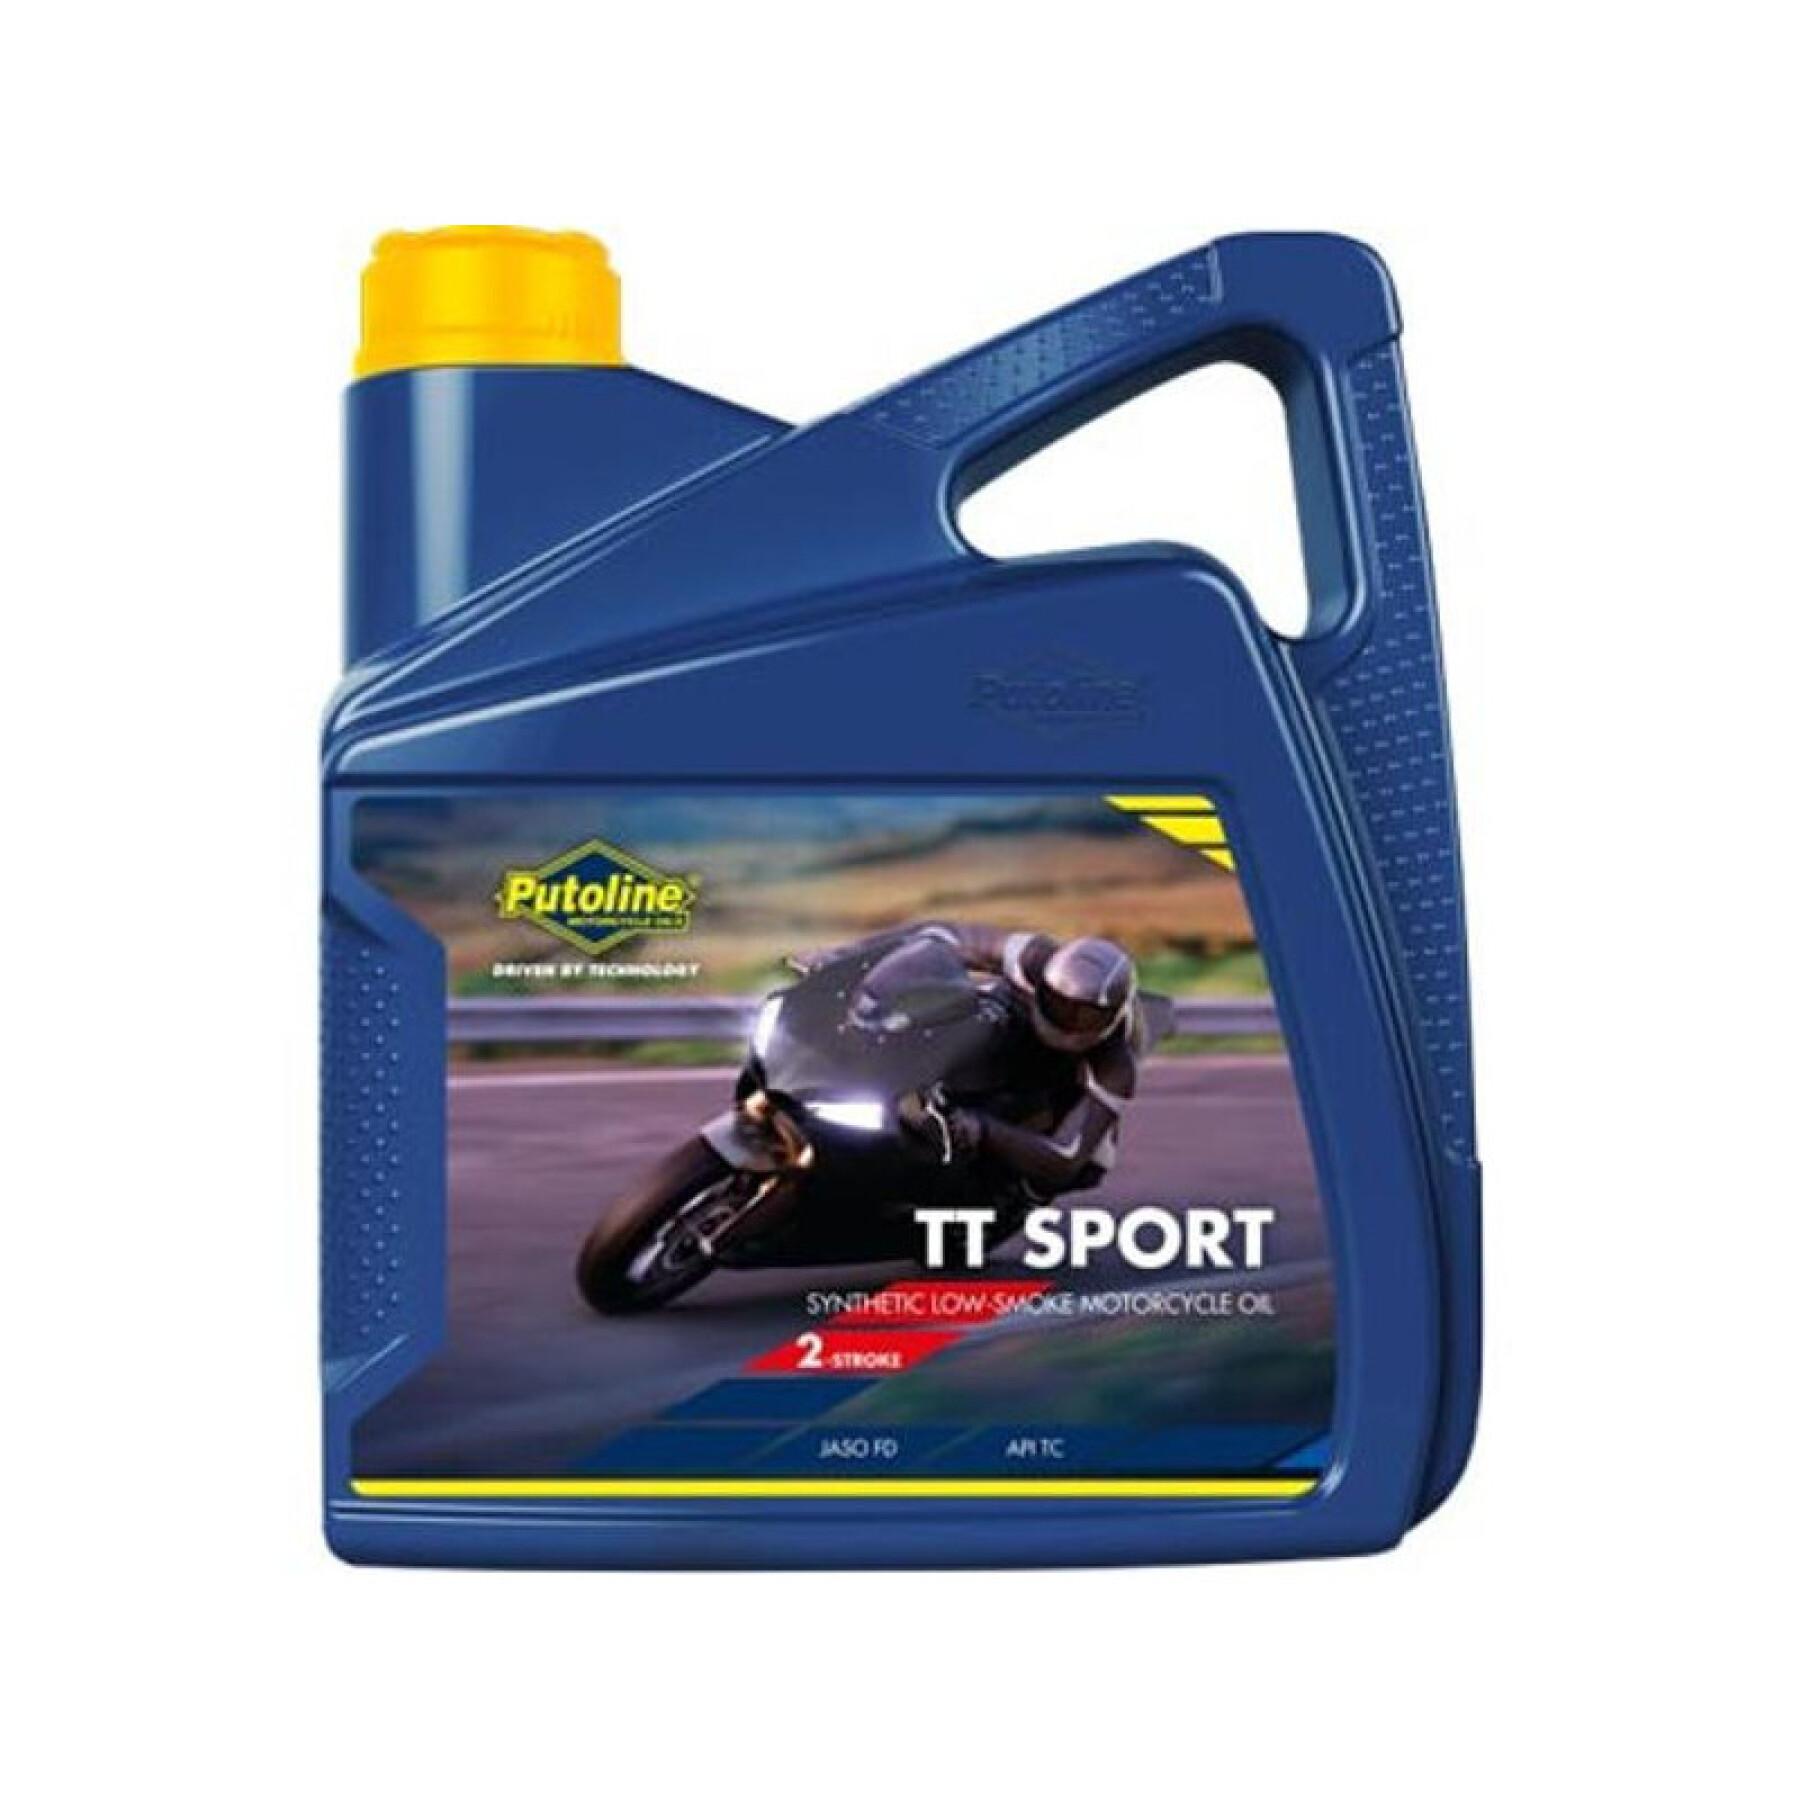 2-stroke motorcycle oil Putoline Tt Sport